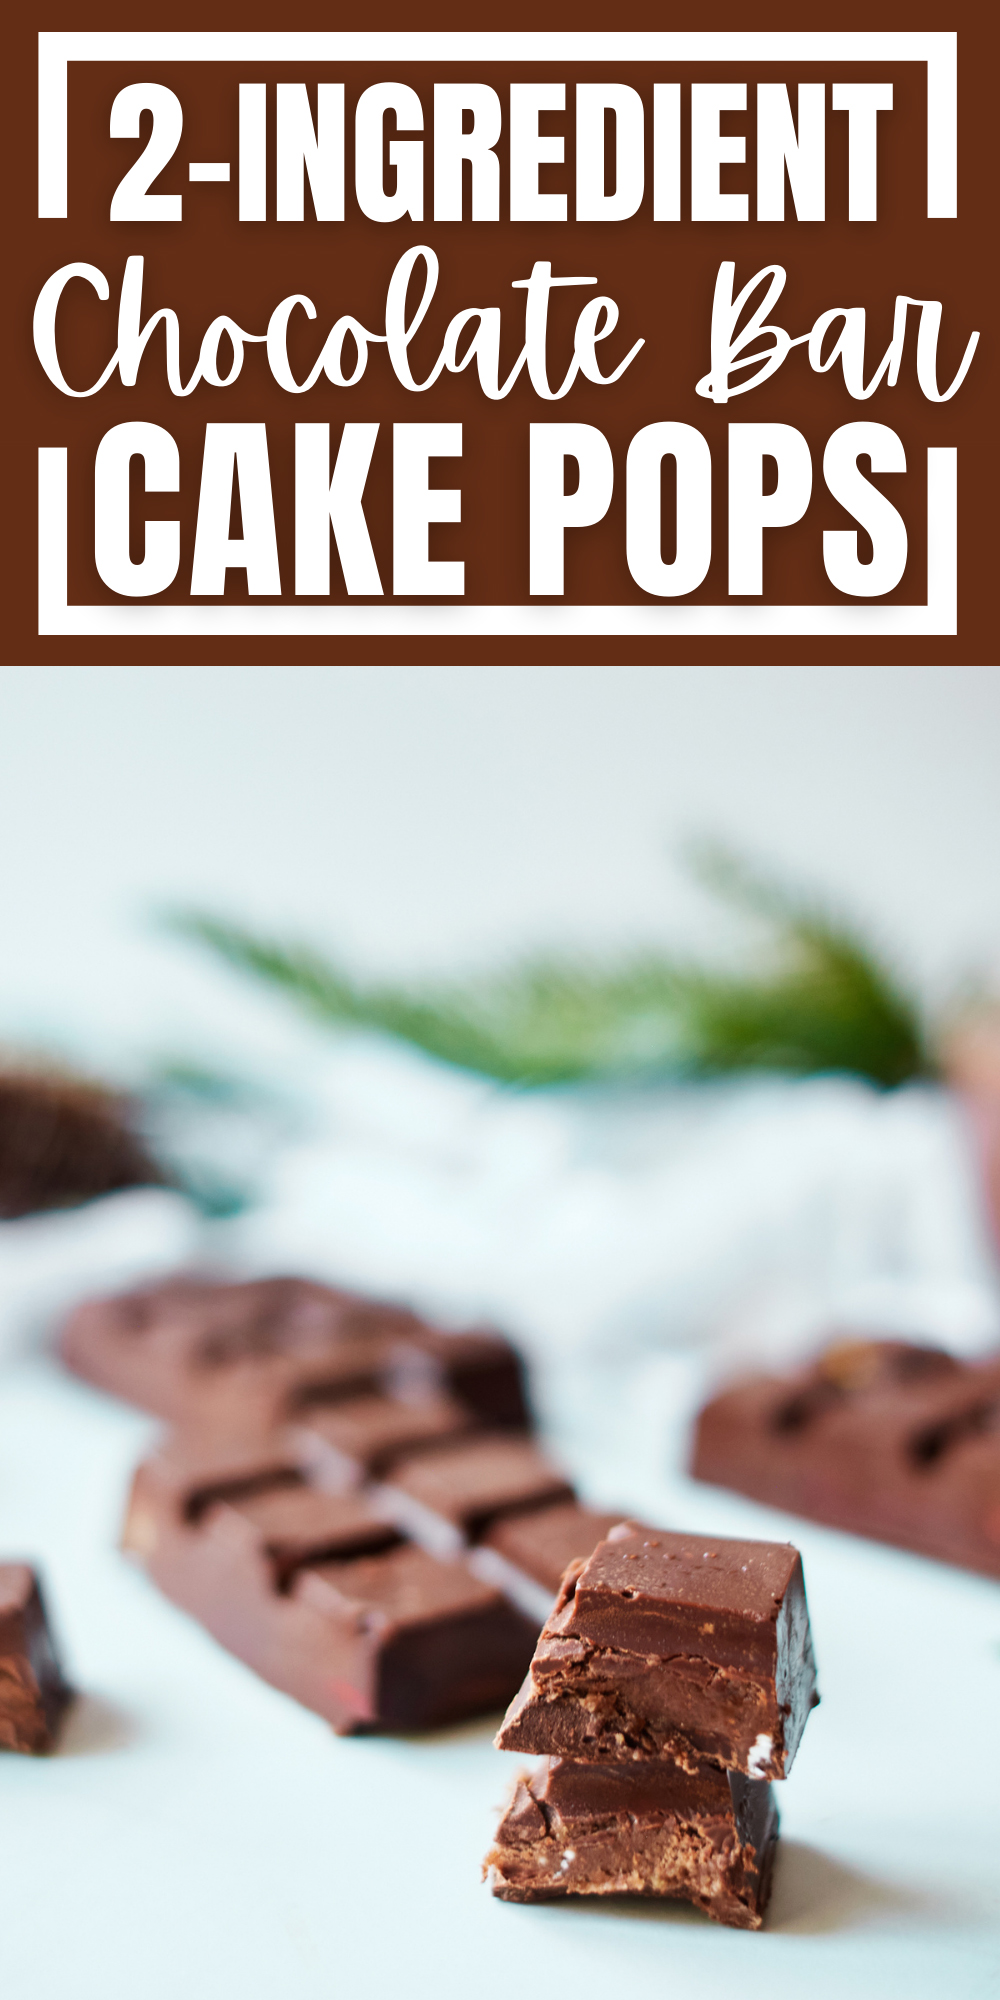 Chocolate Bar Cake Pops